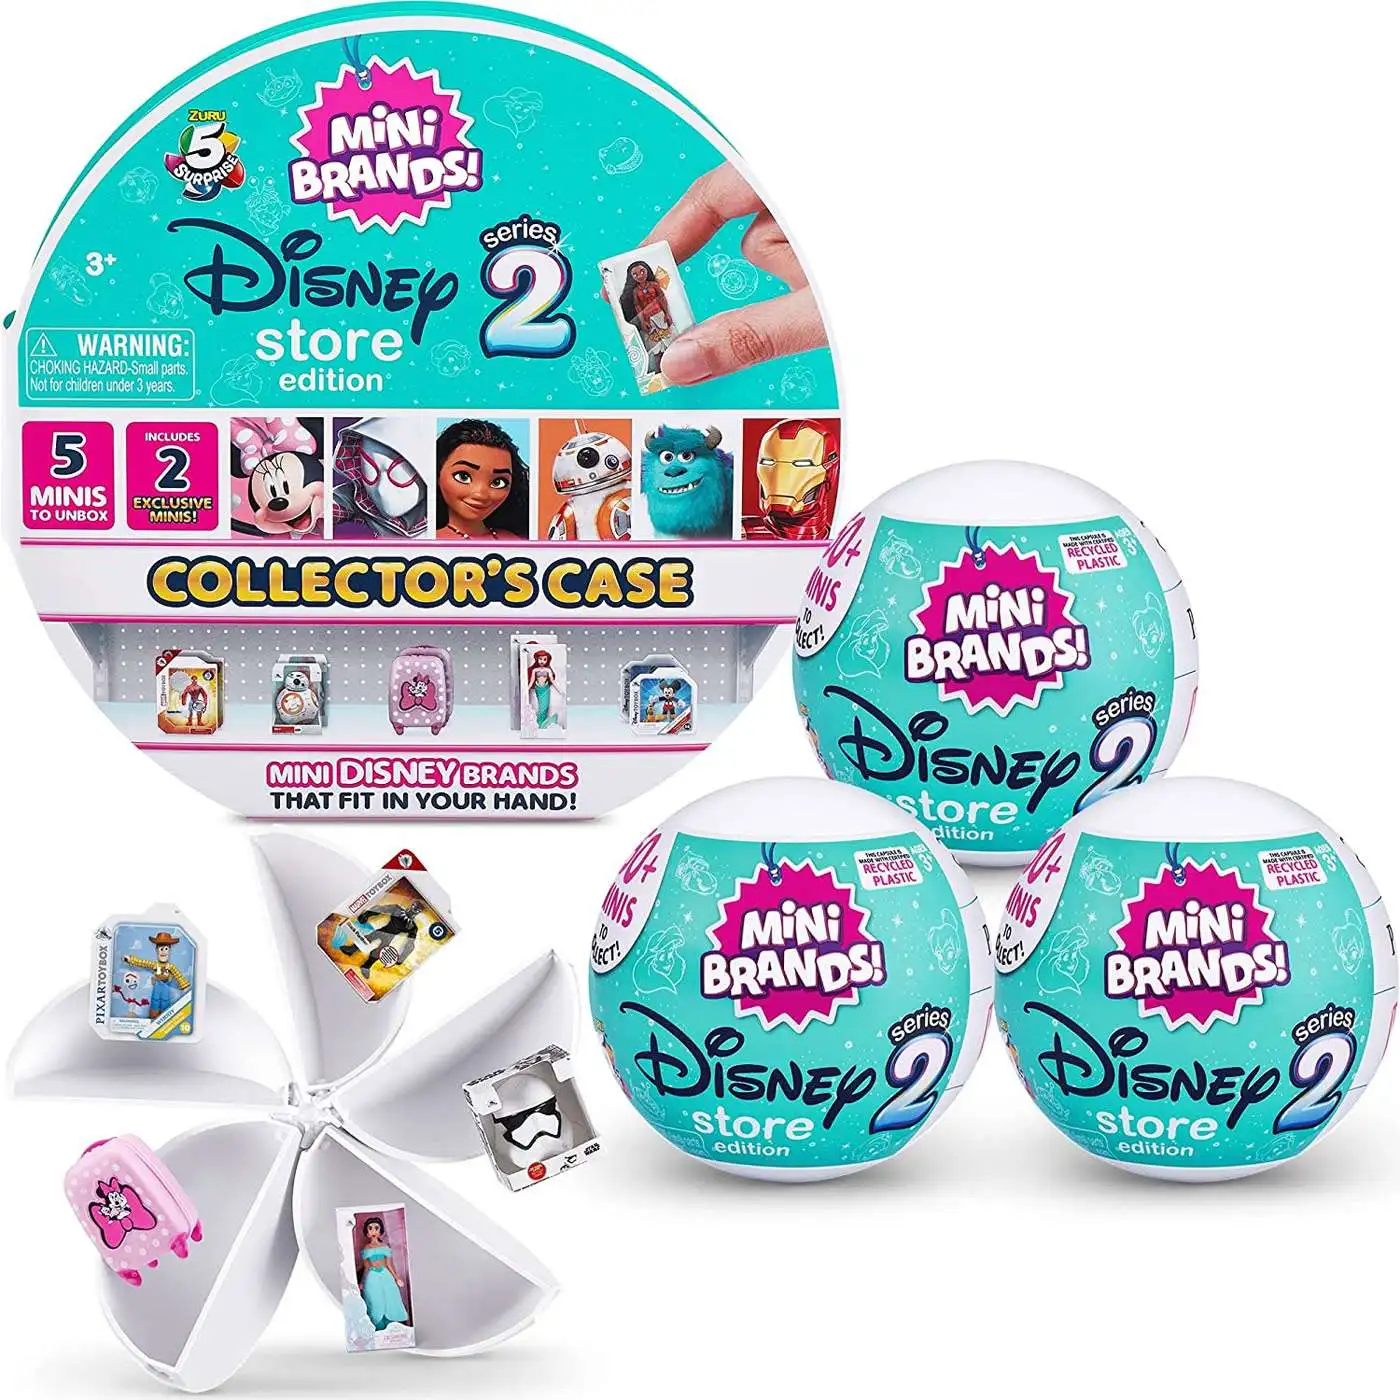 5 Surprise Mini Brands Disney Store Edition Series 2 Collector